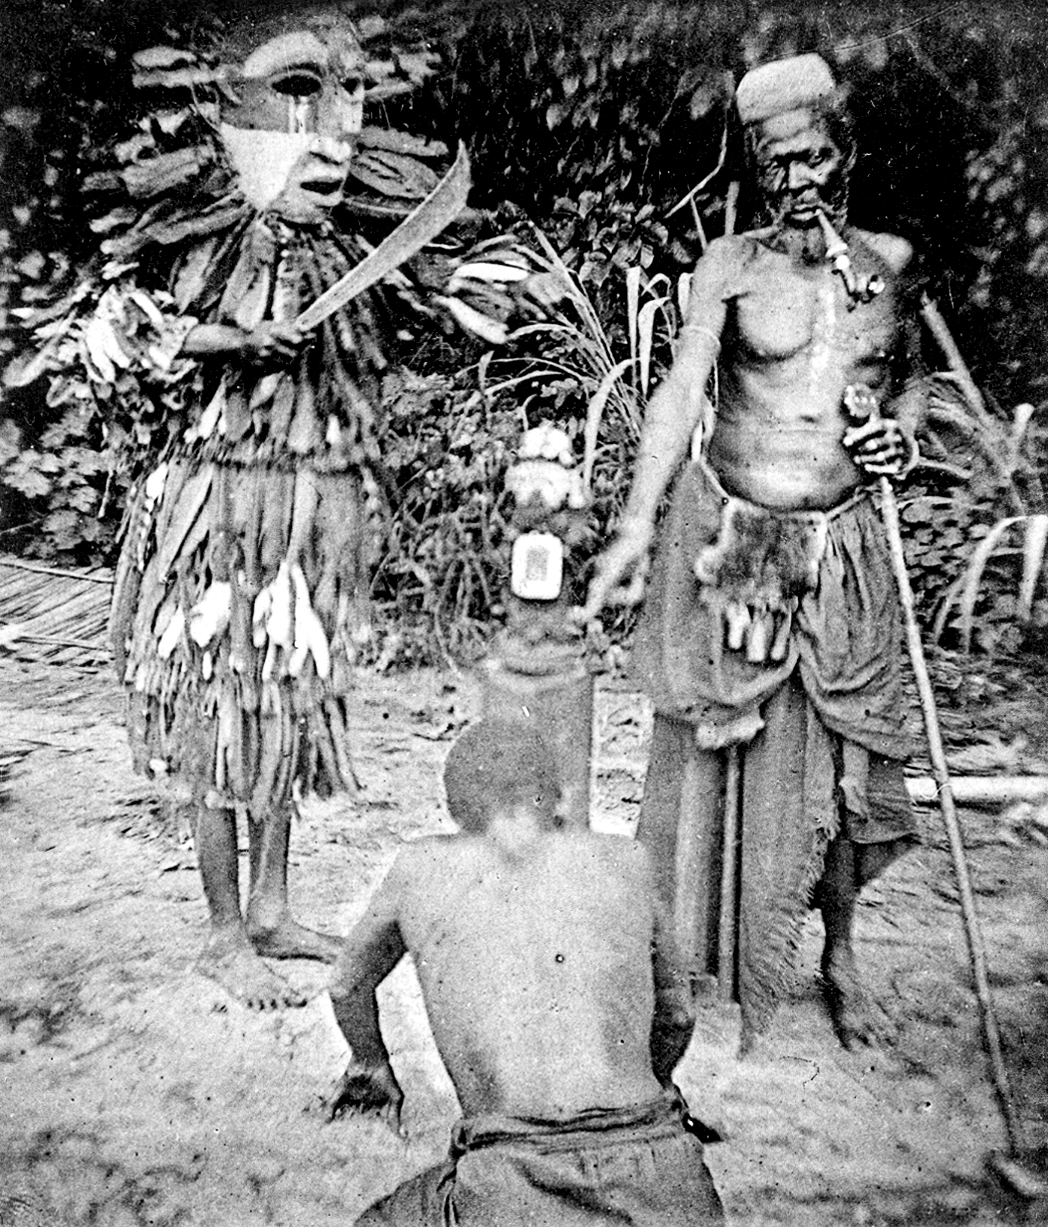 Robert-Visser-Vili-mask-field-photo-postcard-Congo